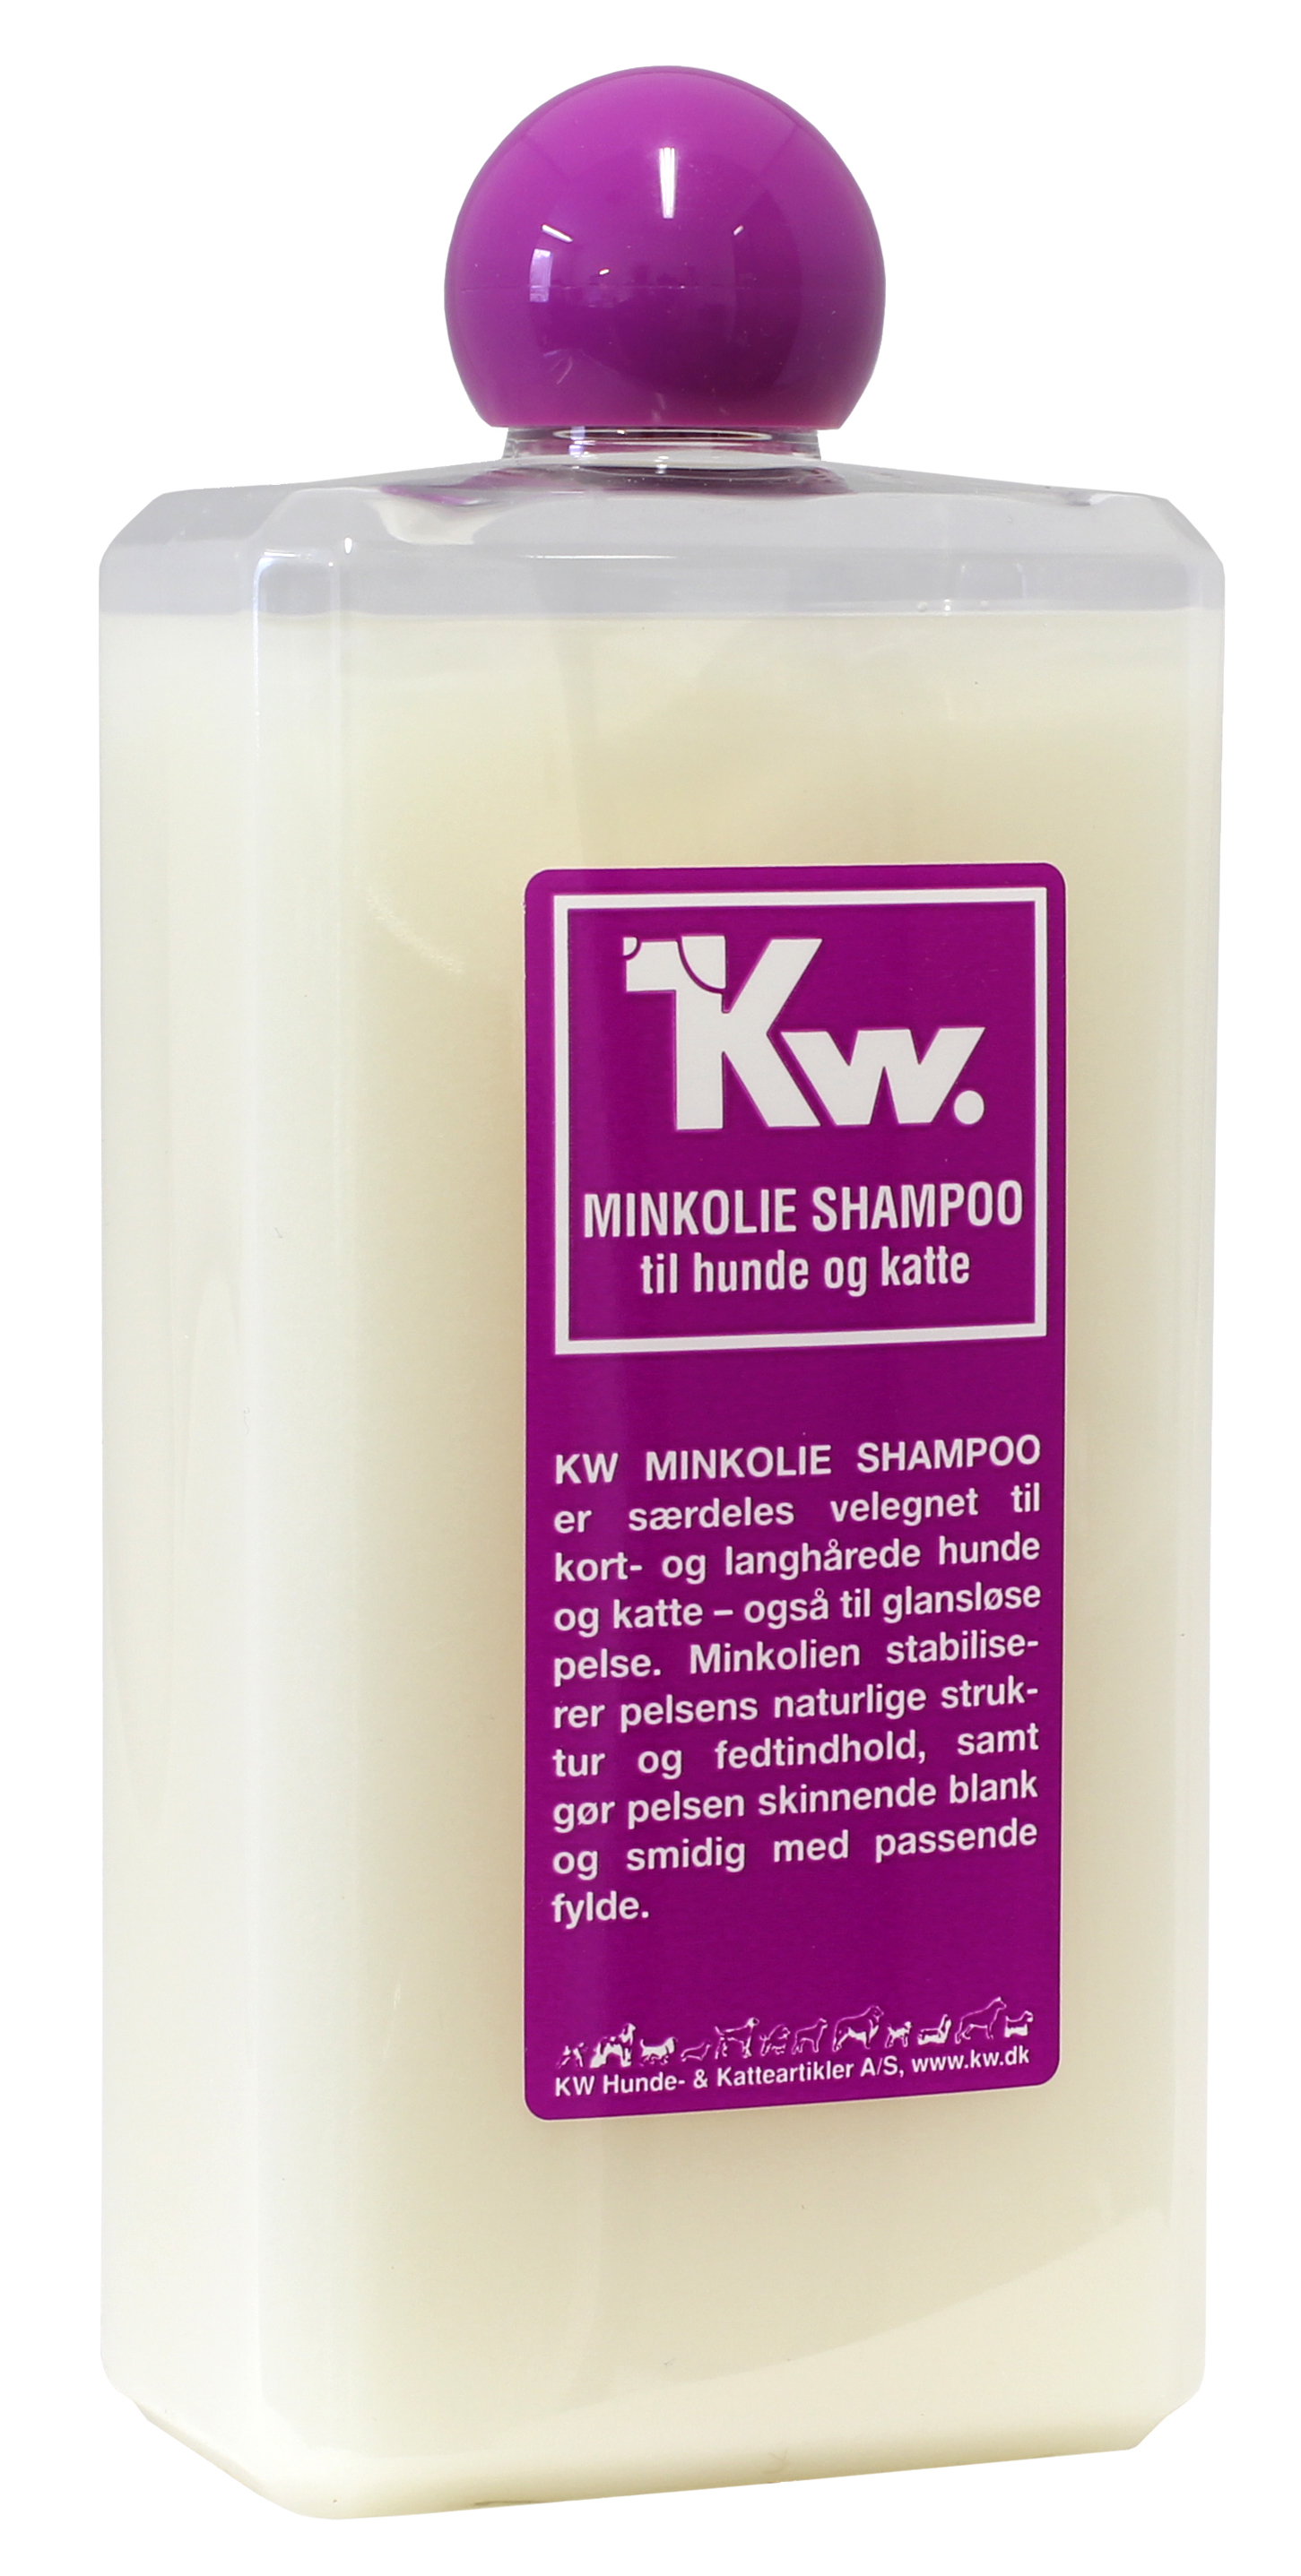 KW Minkolie Shampoo - Shampoo balsam - Secas hundecenter - Hirtshals hundepension v/Rene Jürgensen